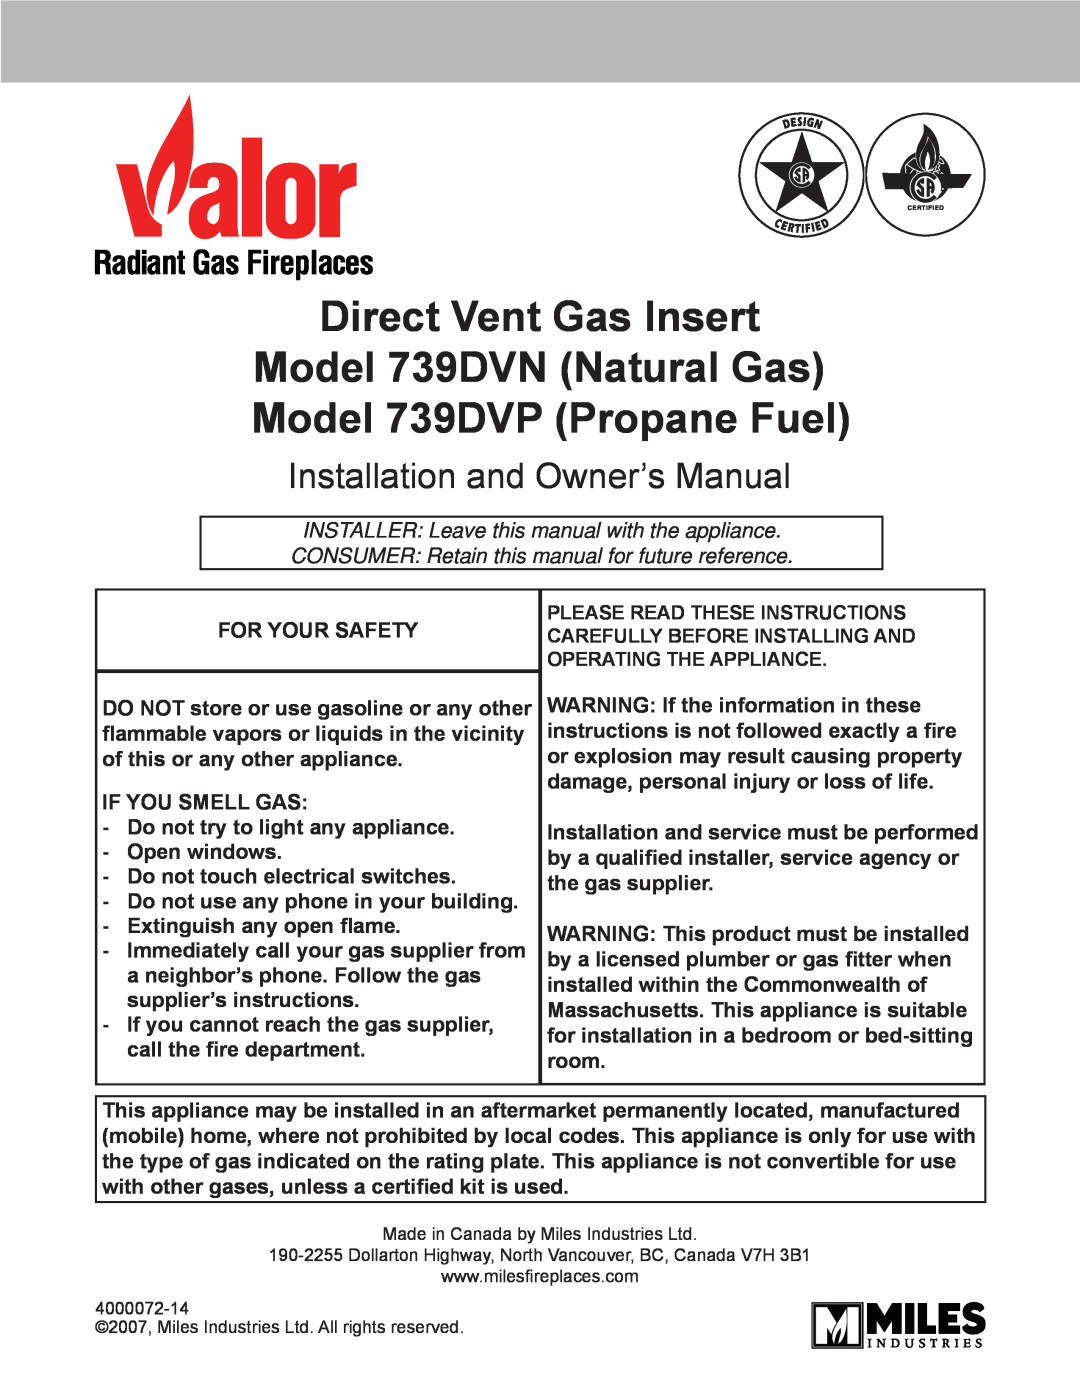 Valor Auto Companion Inc owner manual Direct Vent Gas Insert Model 739DVN Natural Gas, Model 739DVP Propane Fuel 